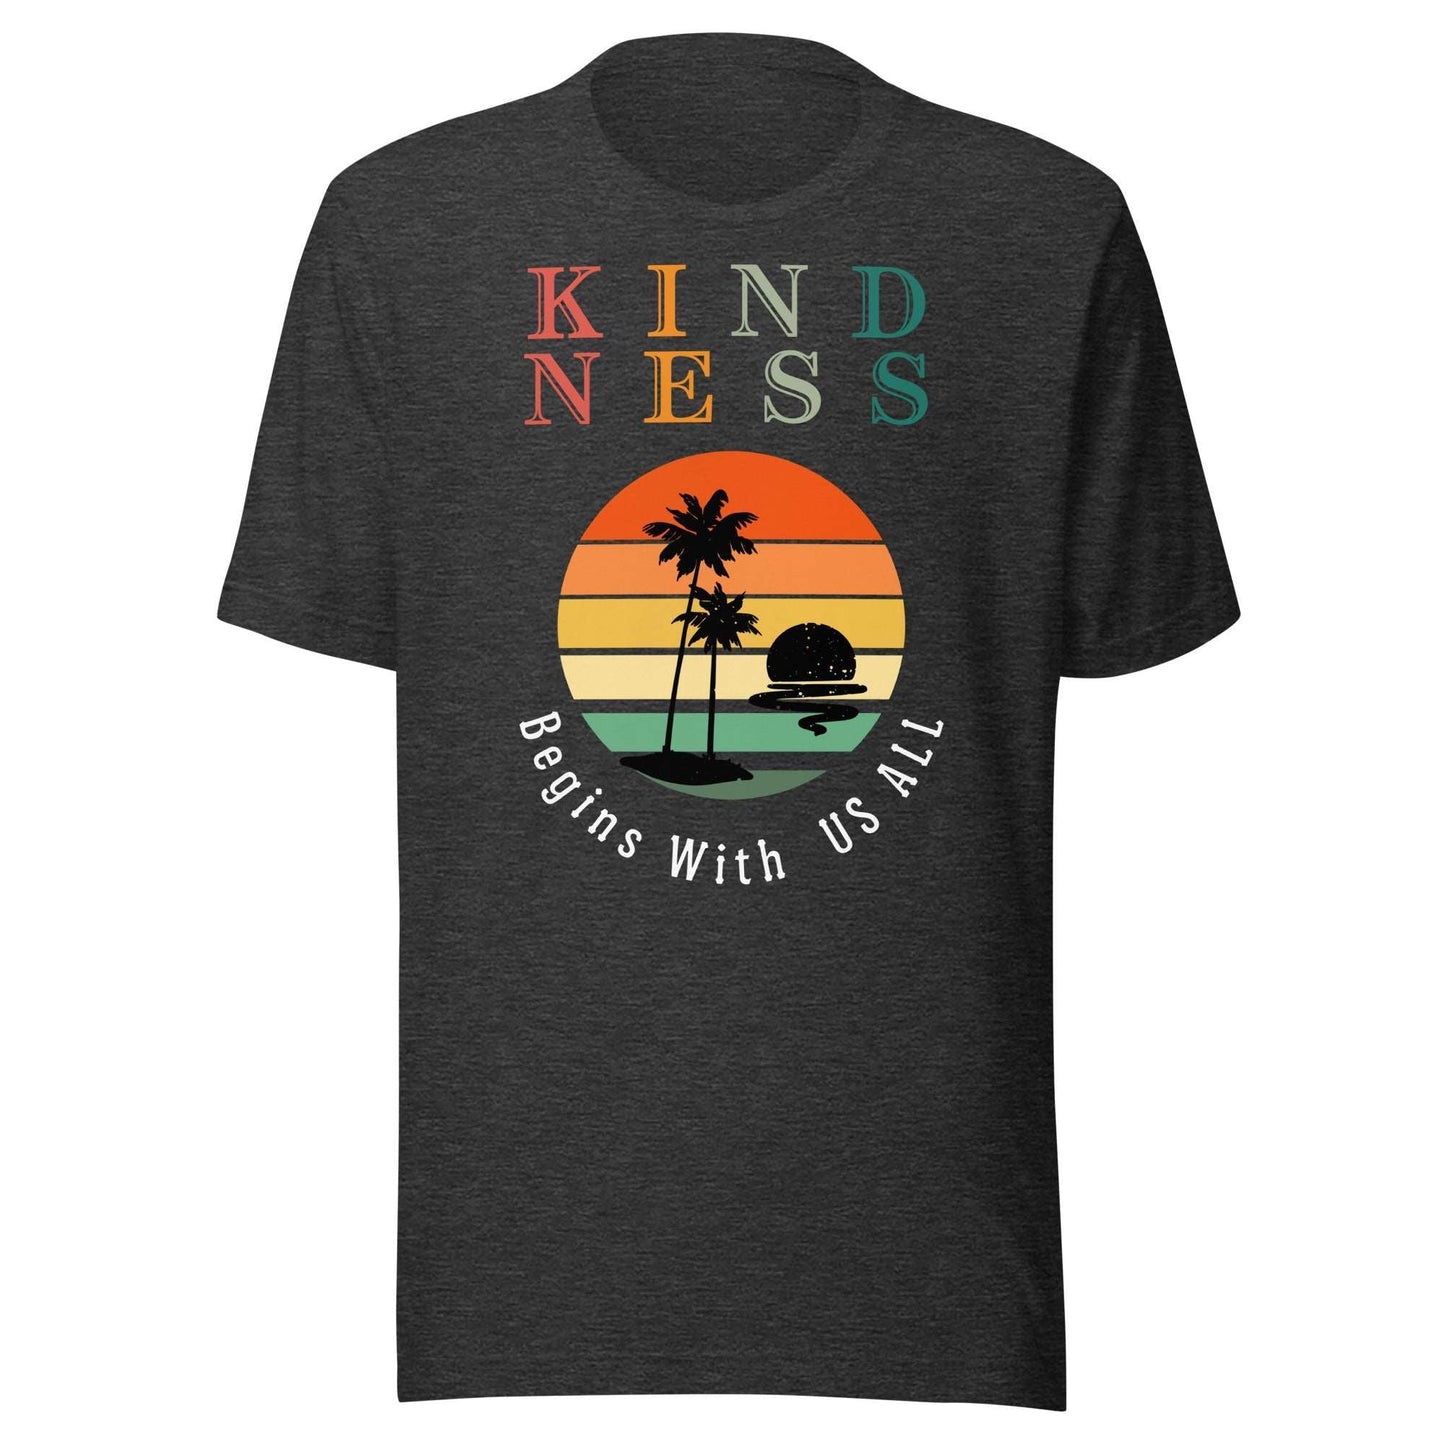 Kindness Begins With Us All Motivational T-Shirt - Motivational Wonders